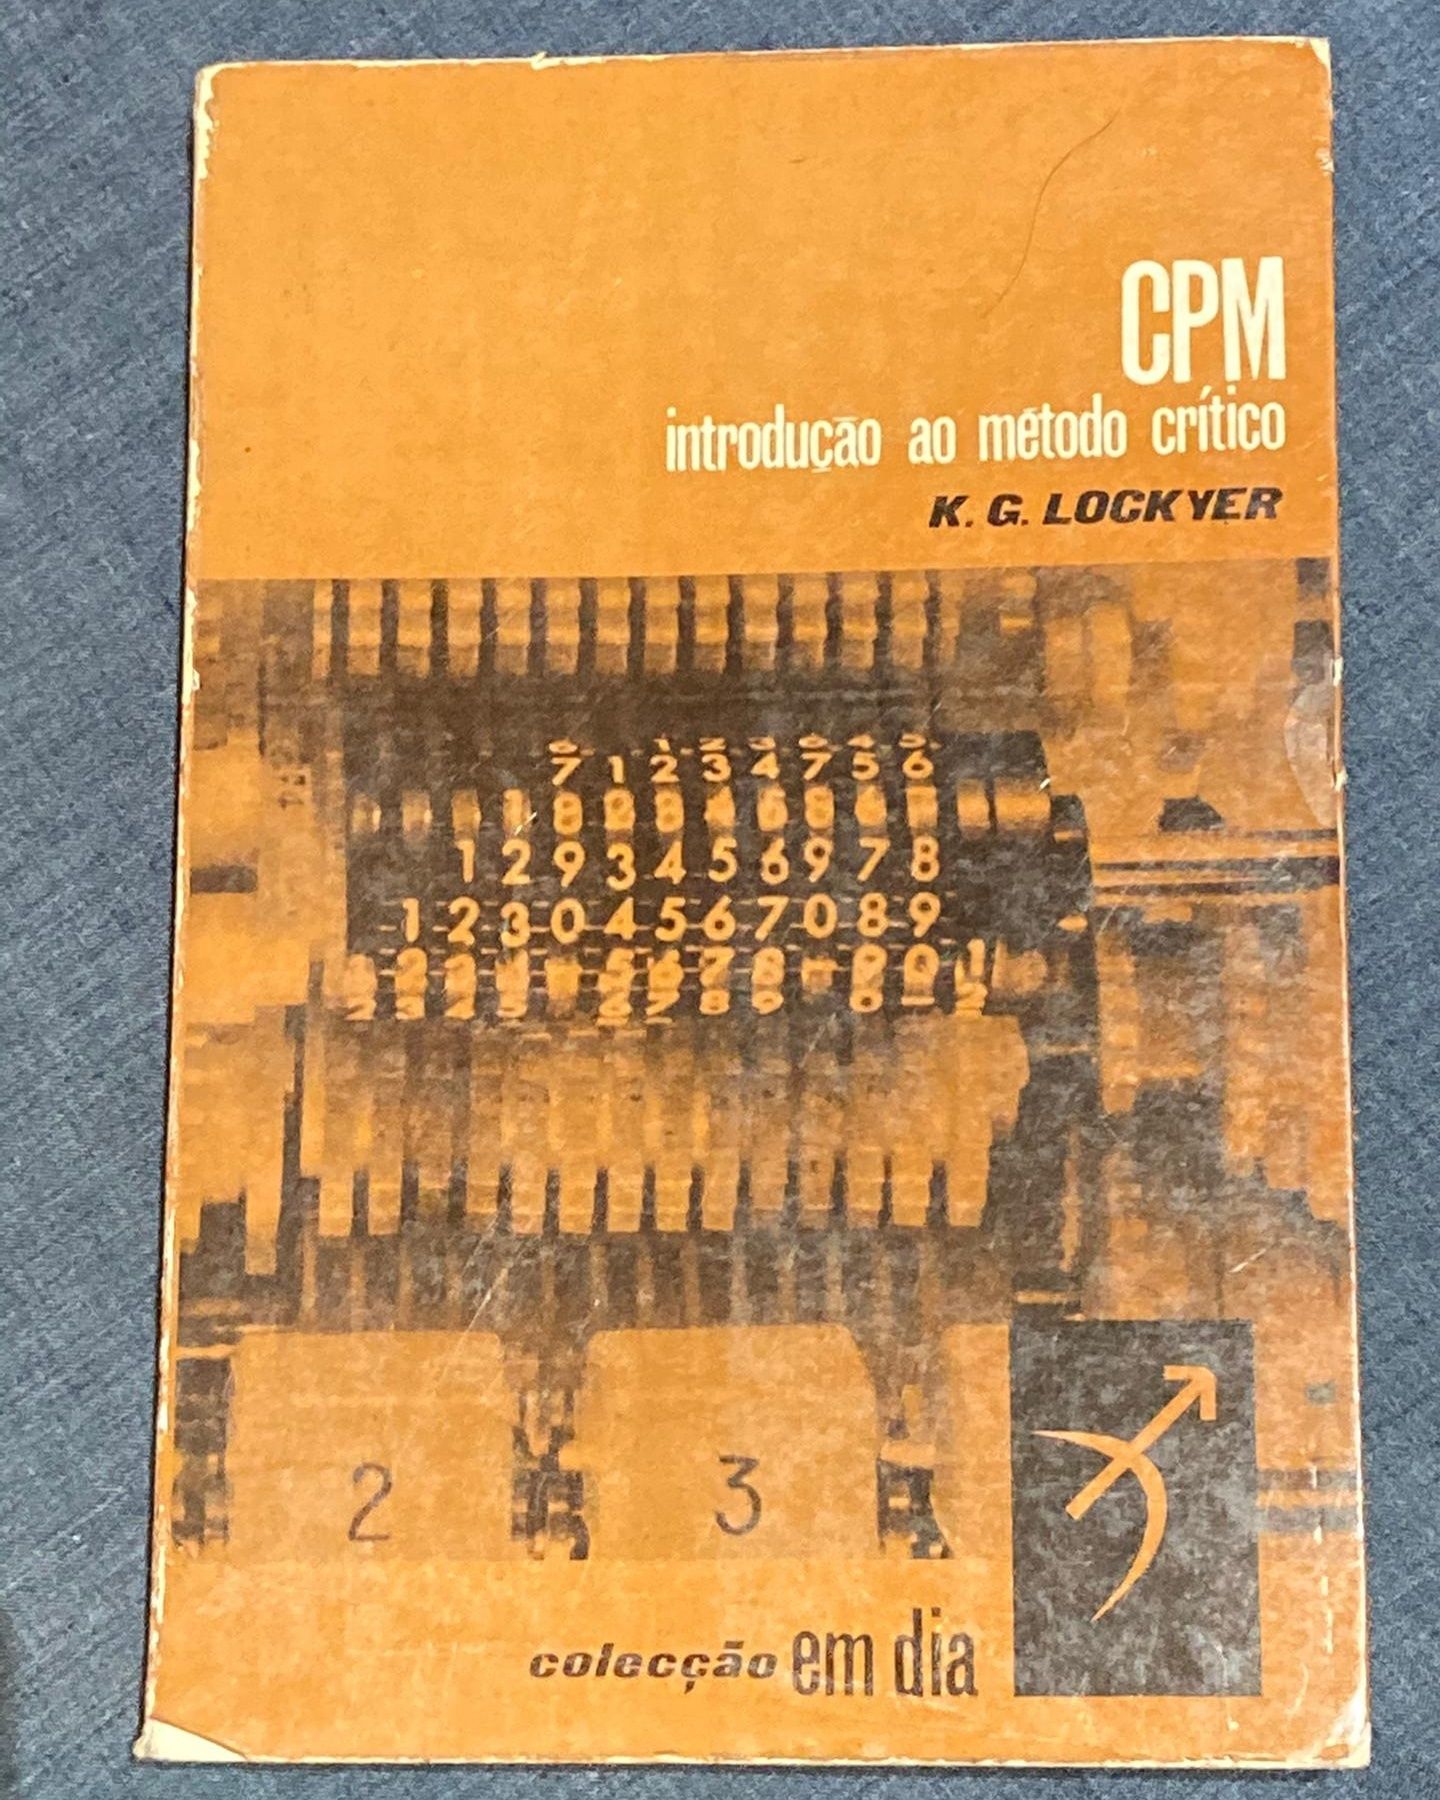 CPM - Introdução ao Método Crítico.